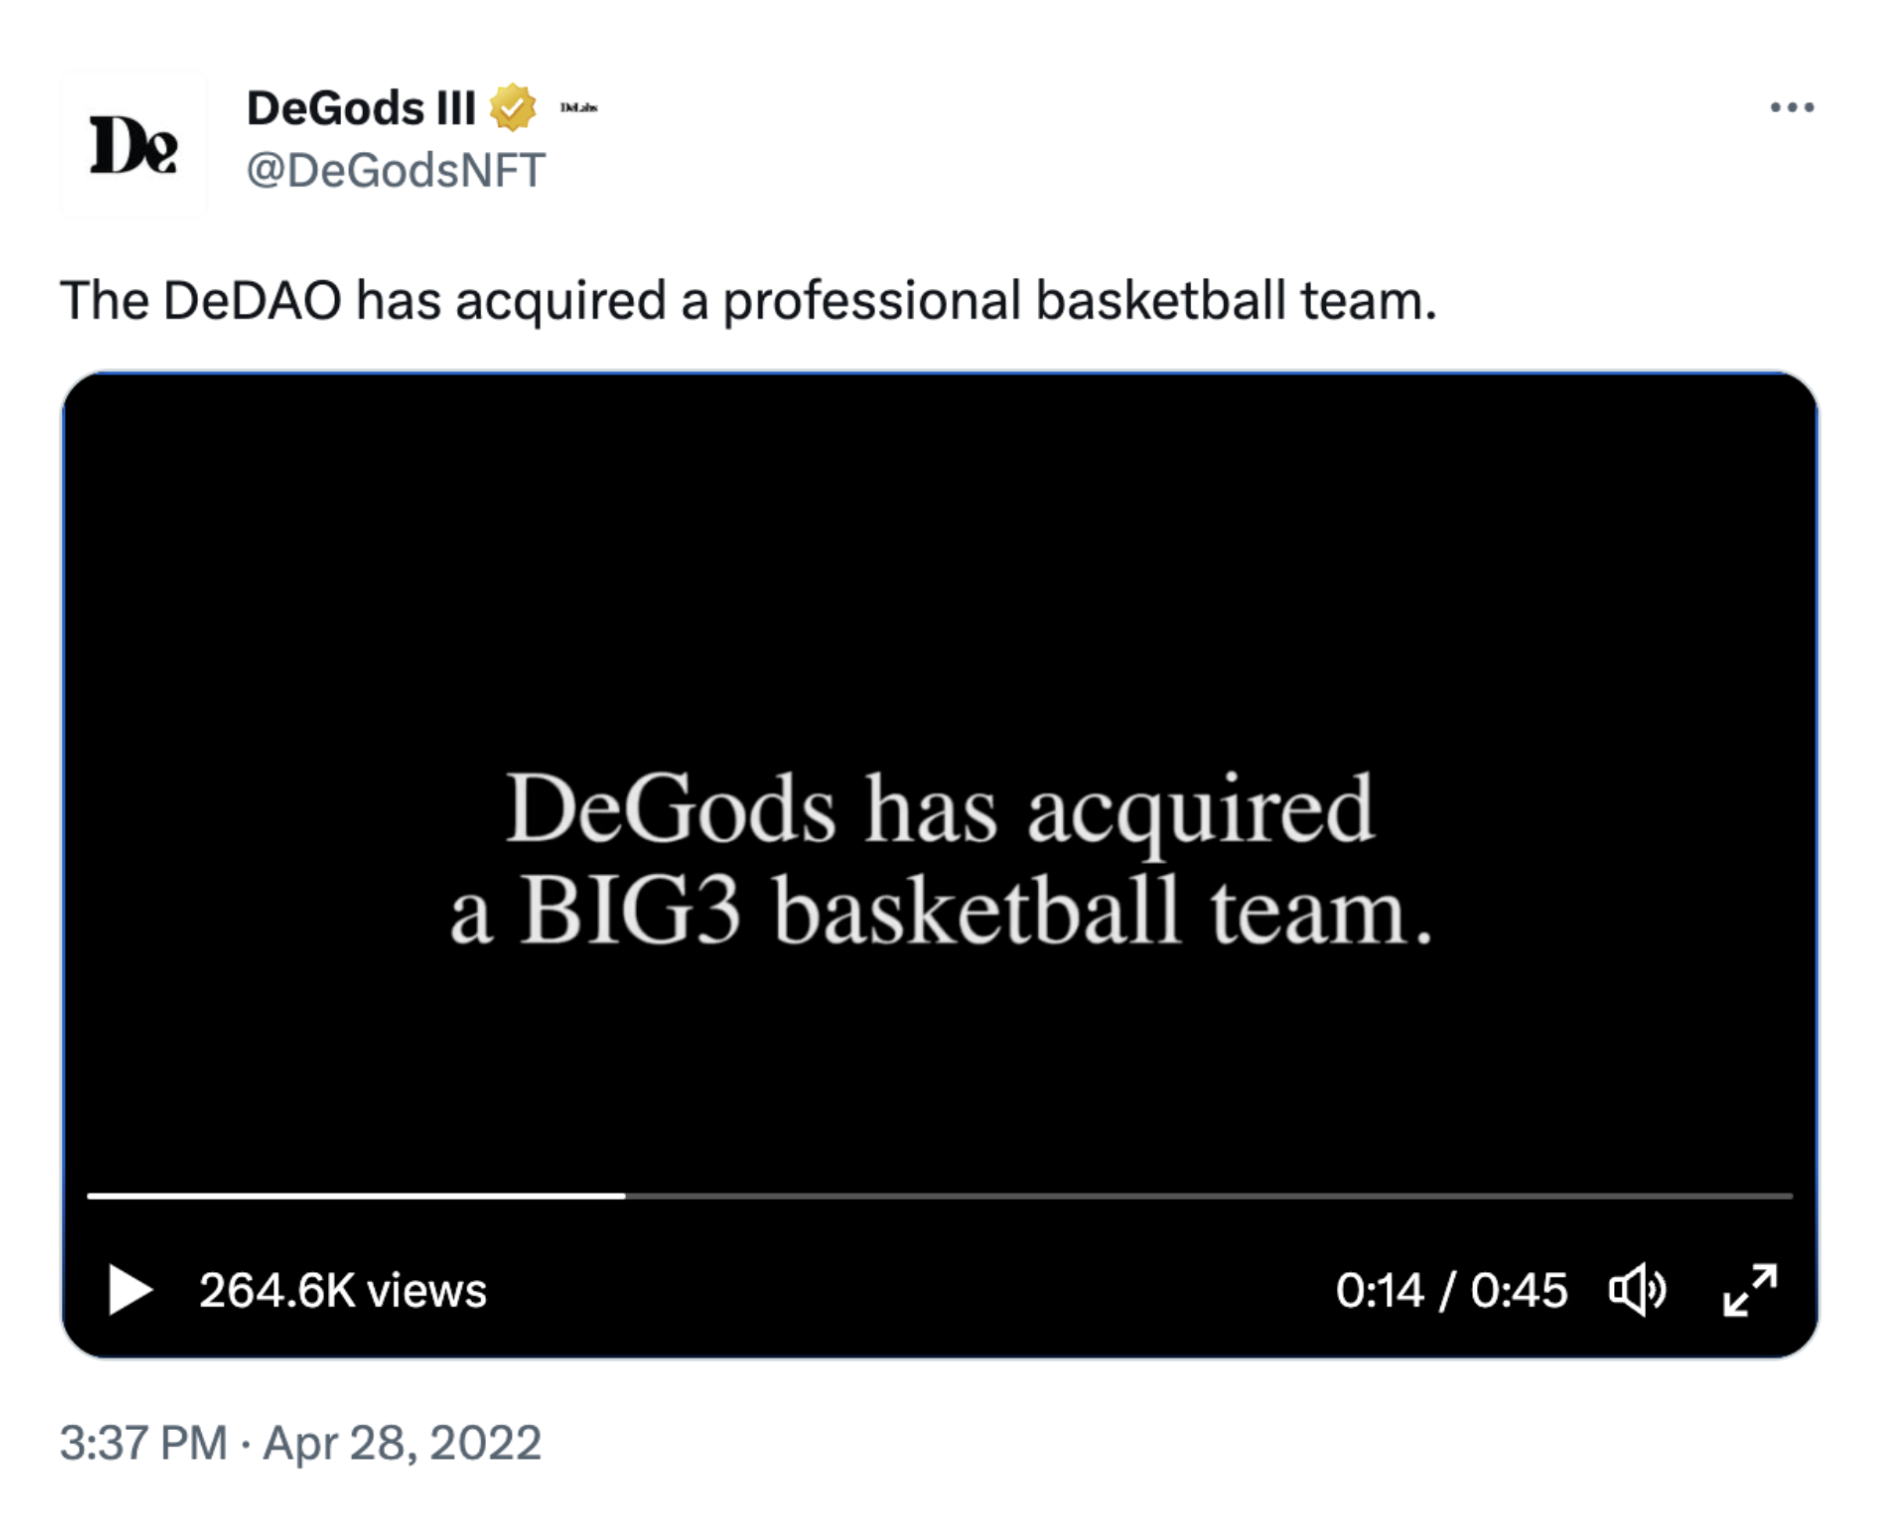 DeGods Acquires a Professional Basketball Team